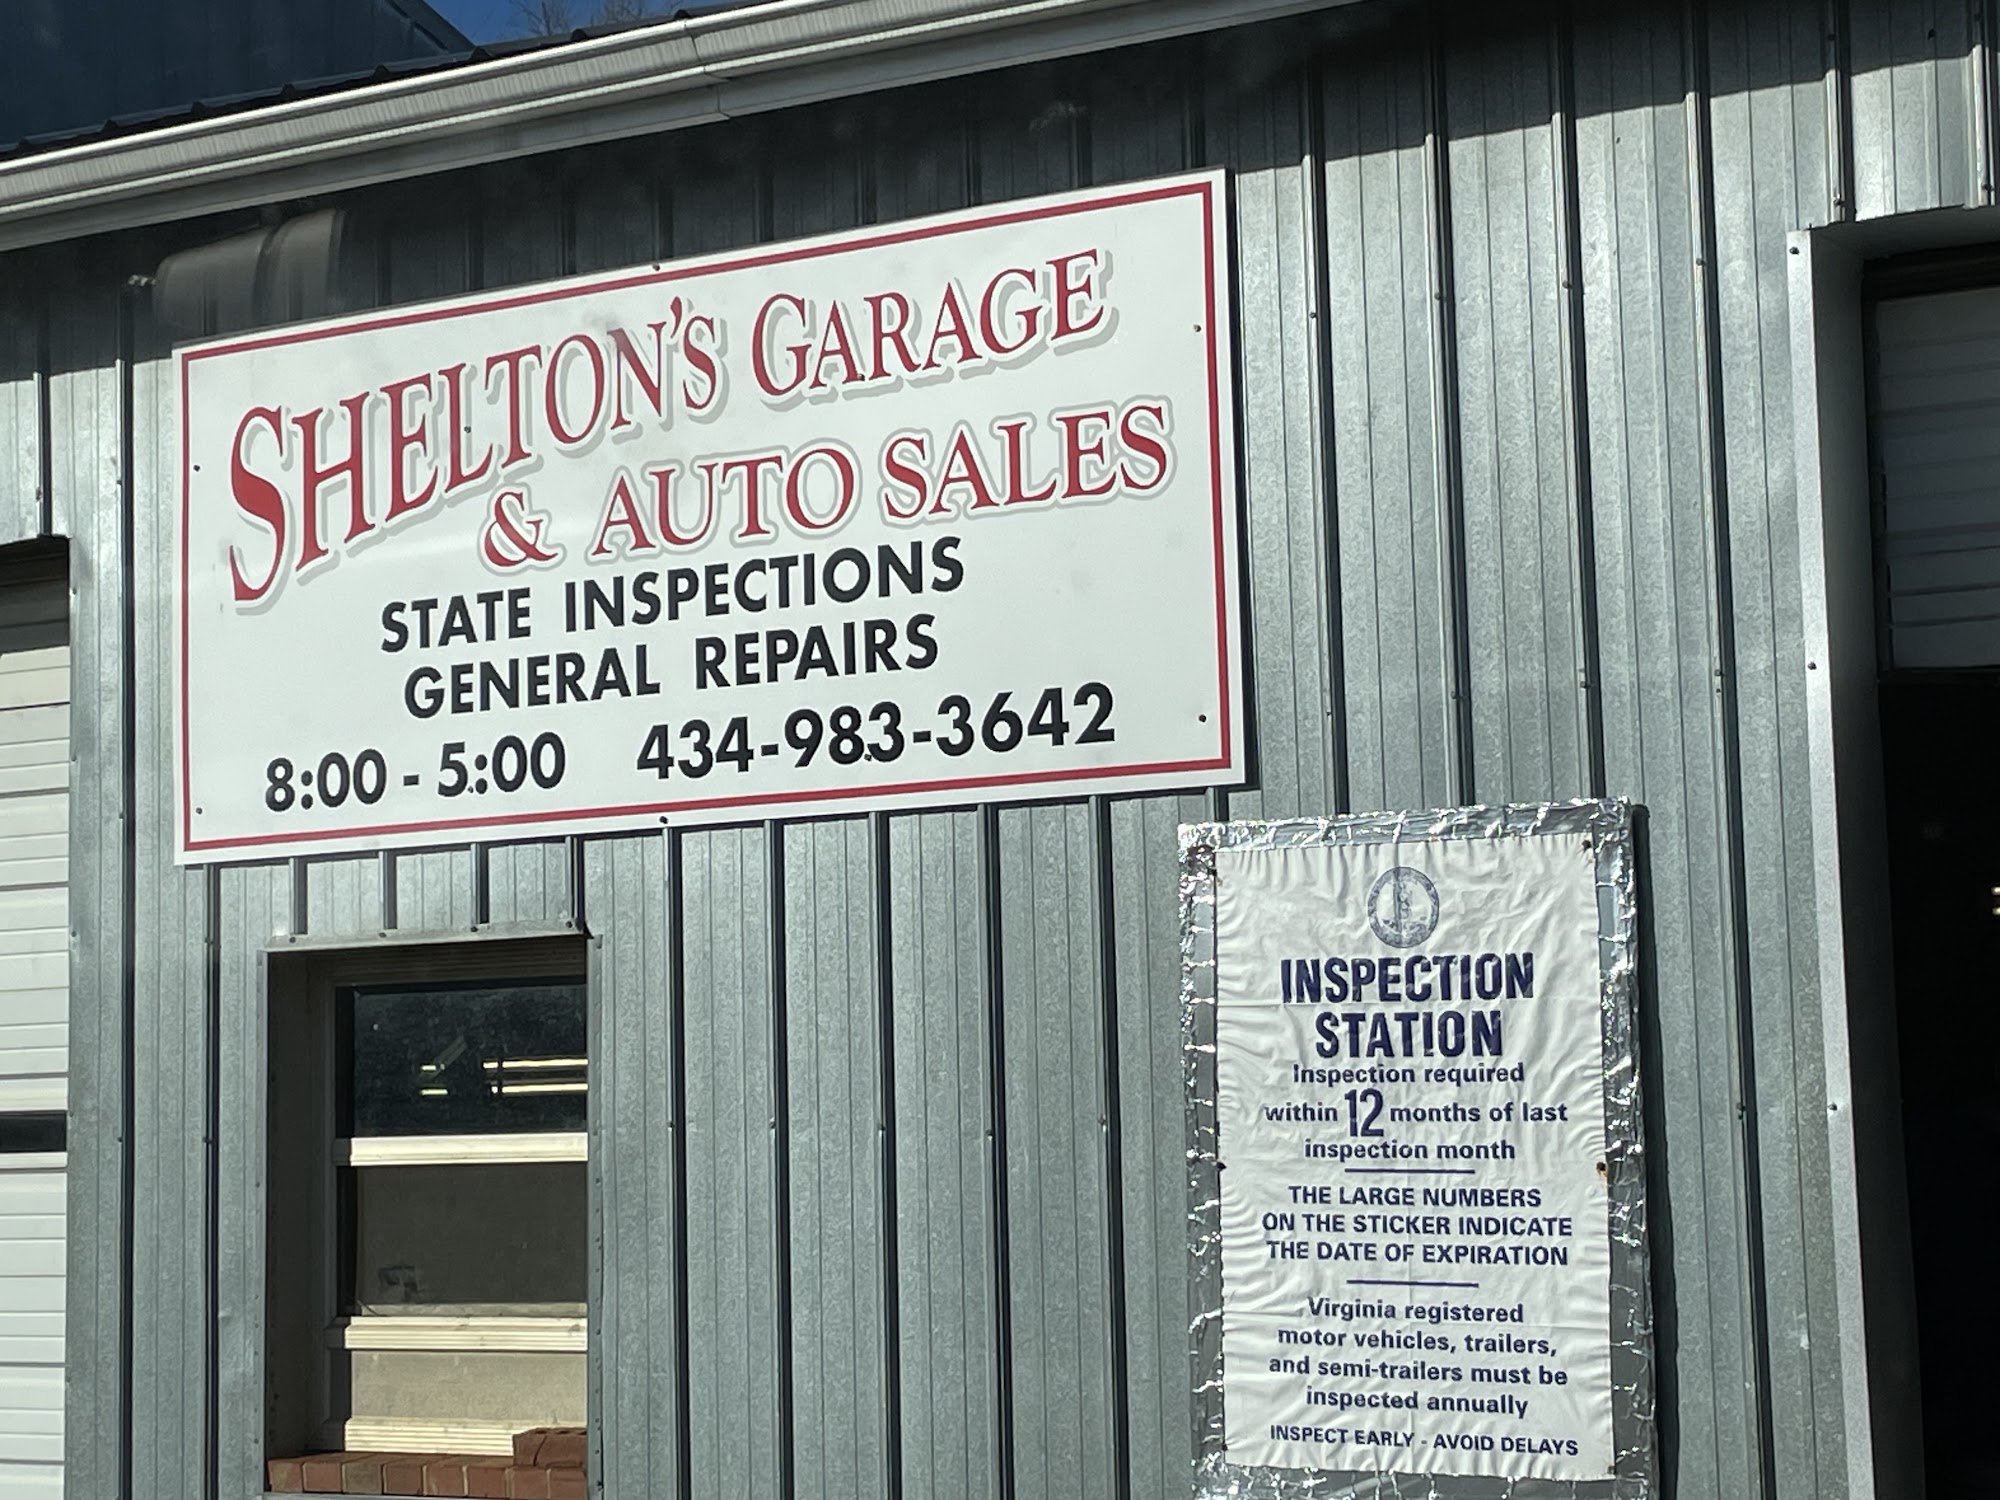 Shelton's Garage